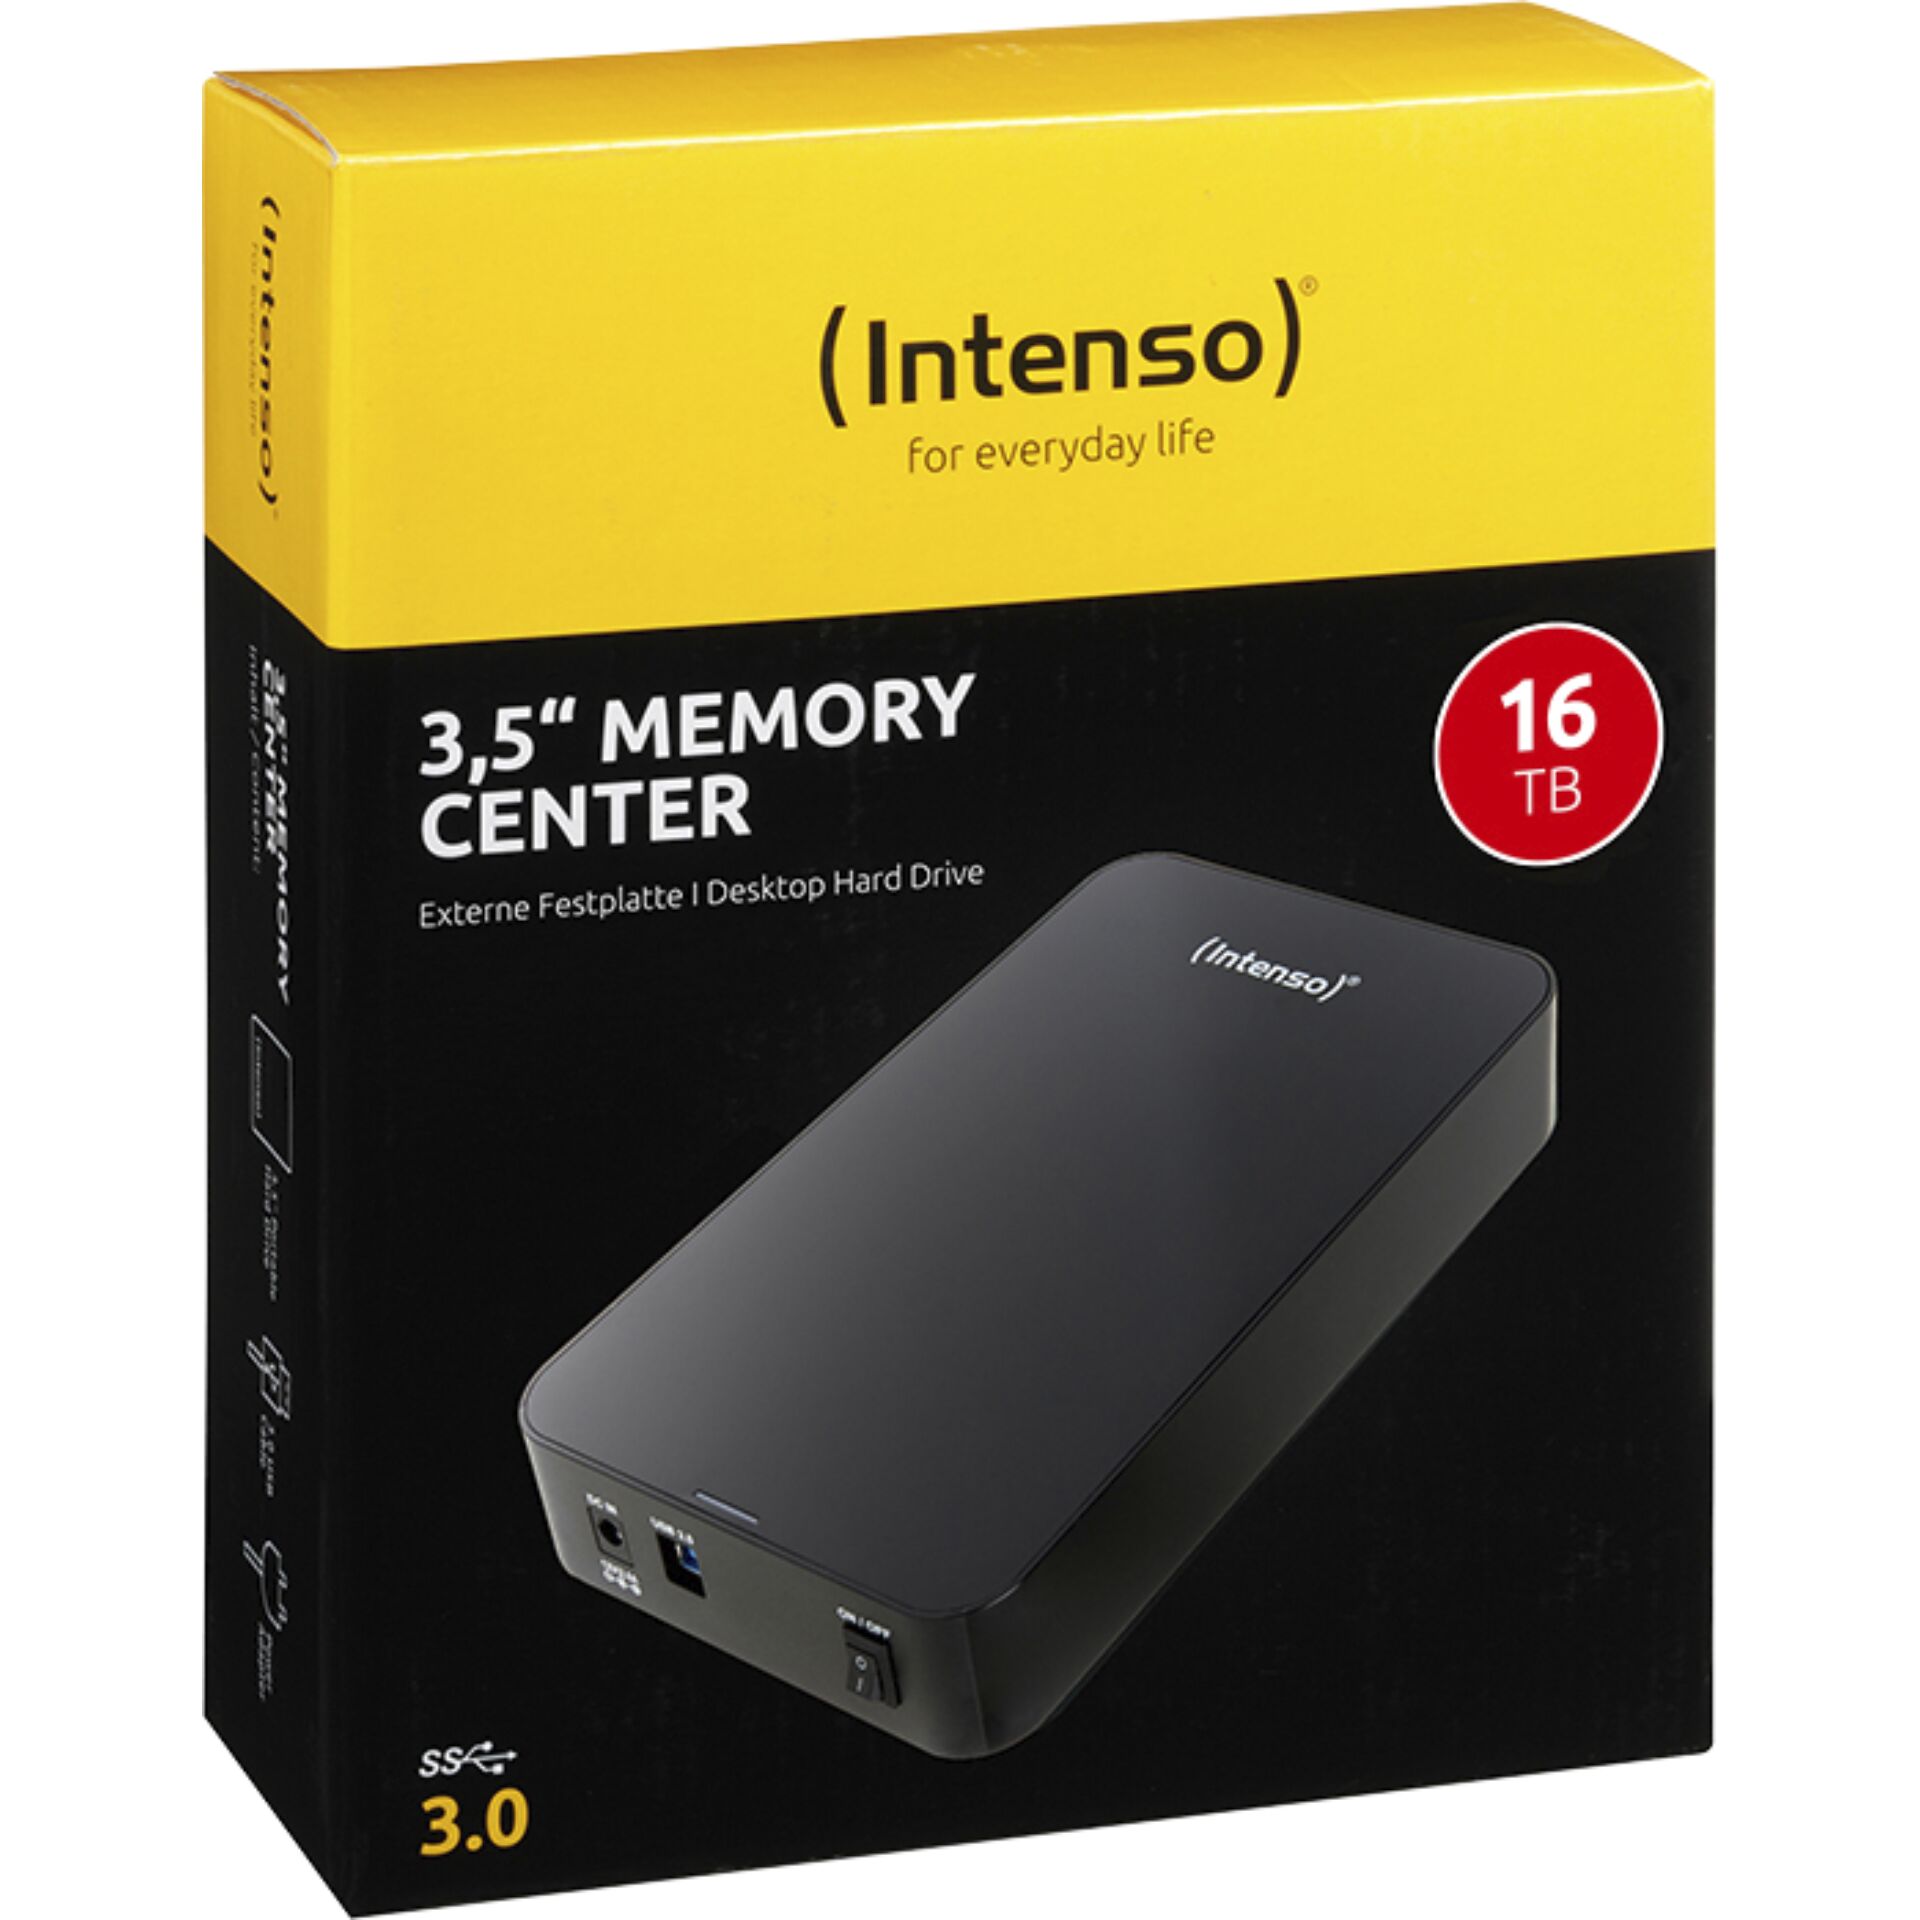 Intenso -5'' HDD 16TB USB 3.0 schwarz Memory Center 3 -Intenso  Hardware/Electronic